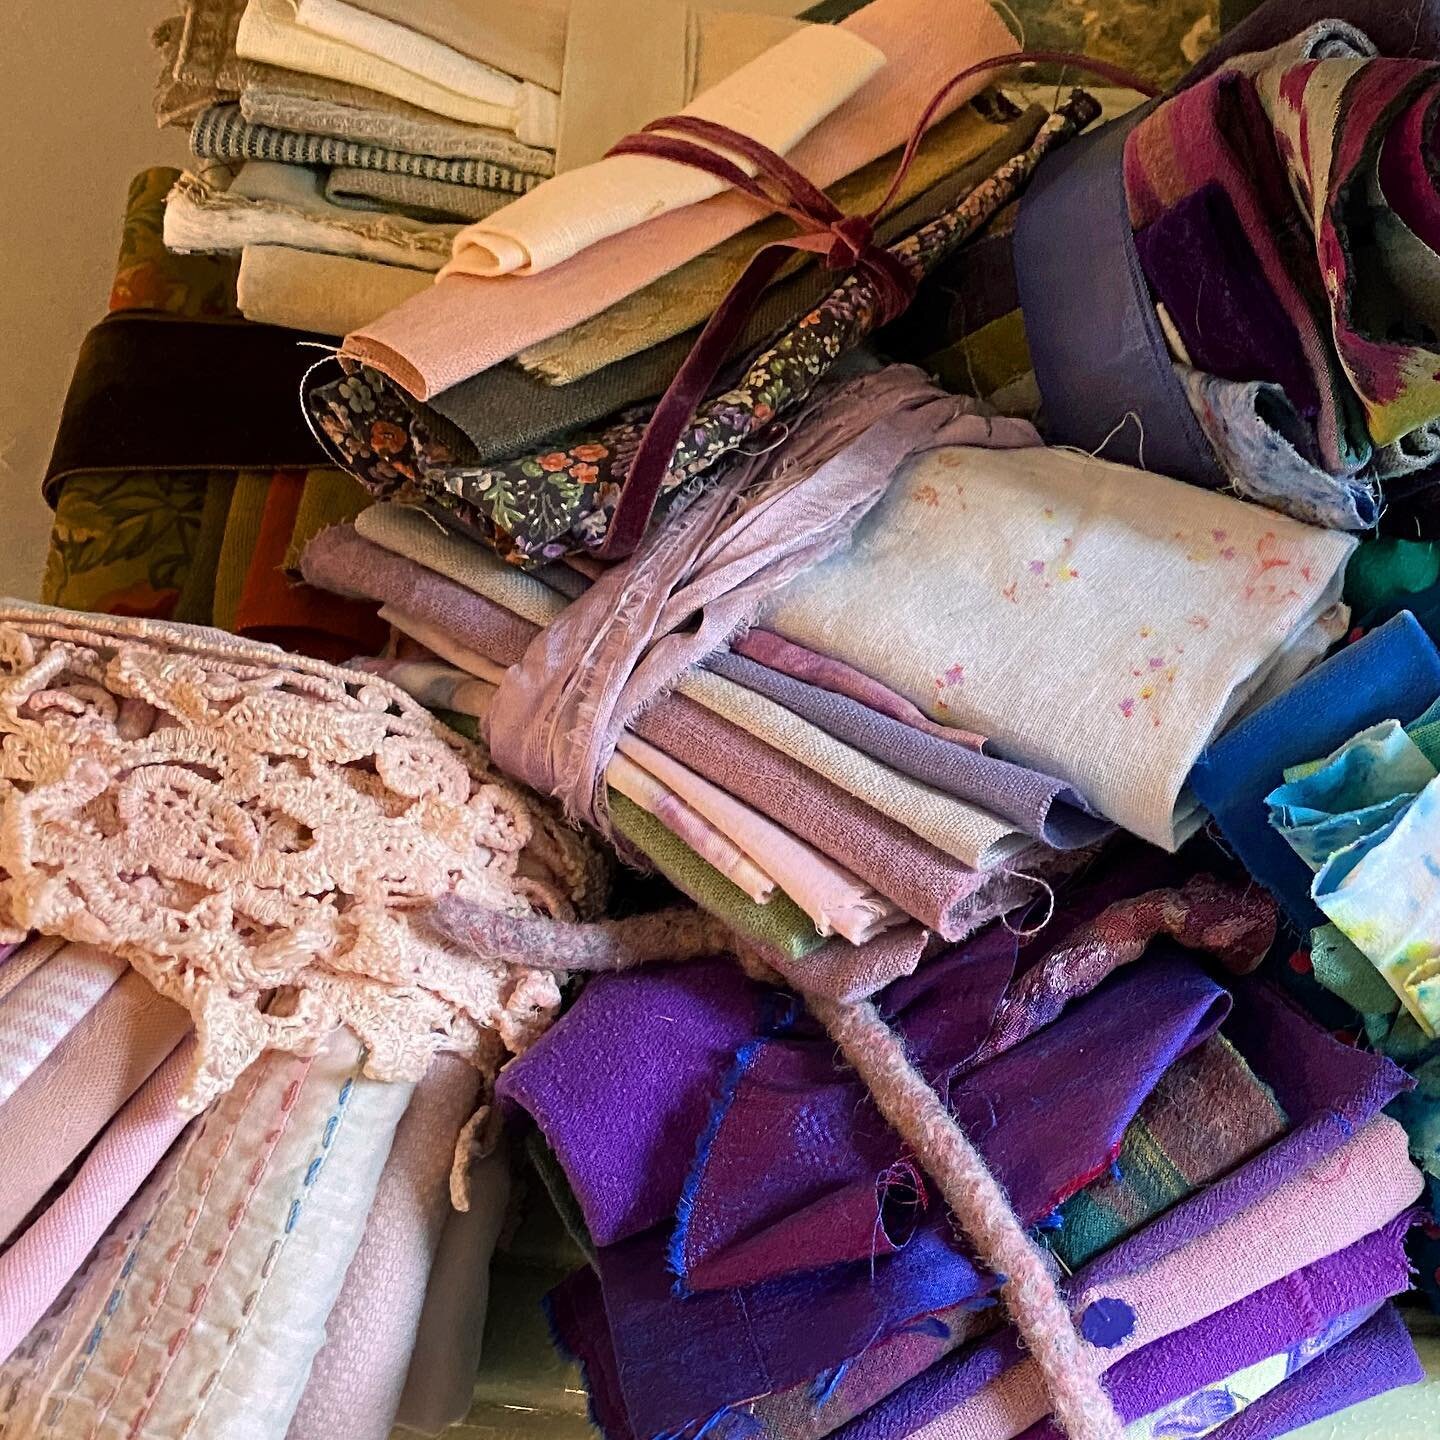 * Bundles * 
 
More textile bundles, waiting to become &hellip;
 
#textiles #fiberart #fiberfun #textilebundles #sewingmakesmehappy #morncm